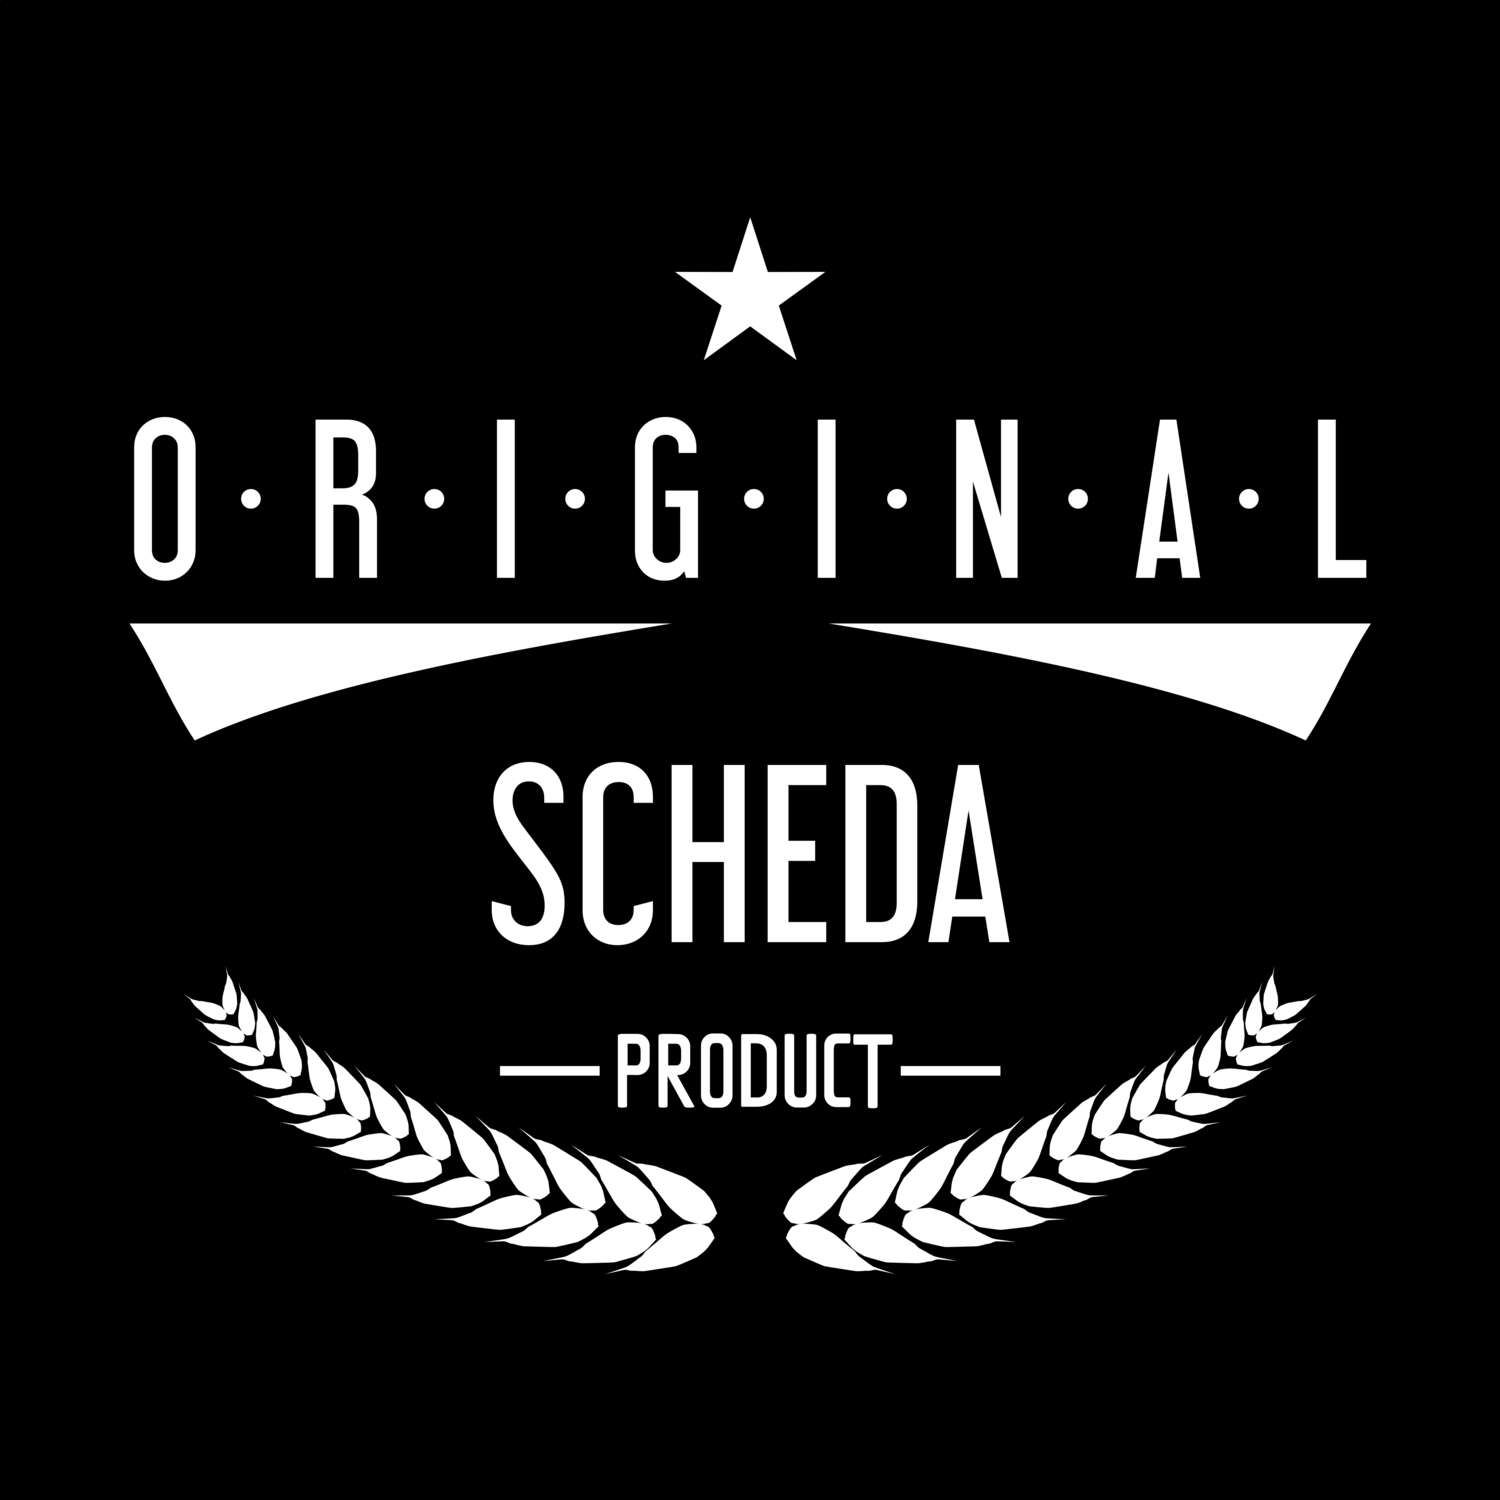 Scheda T-Shirt »Original Product«